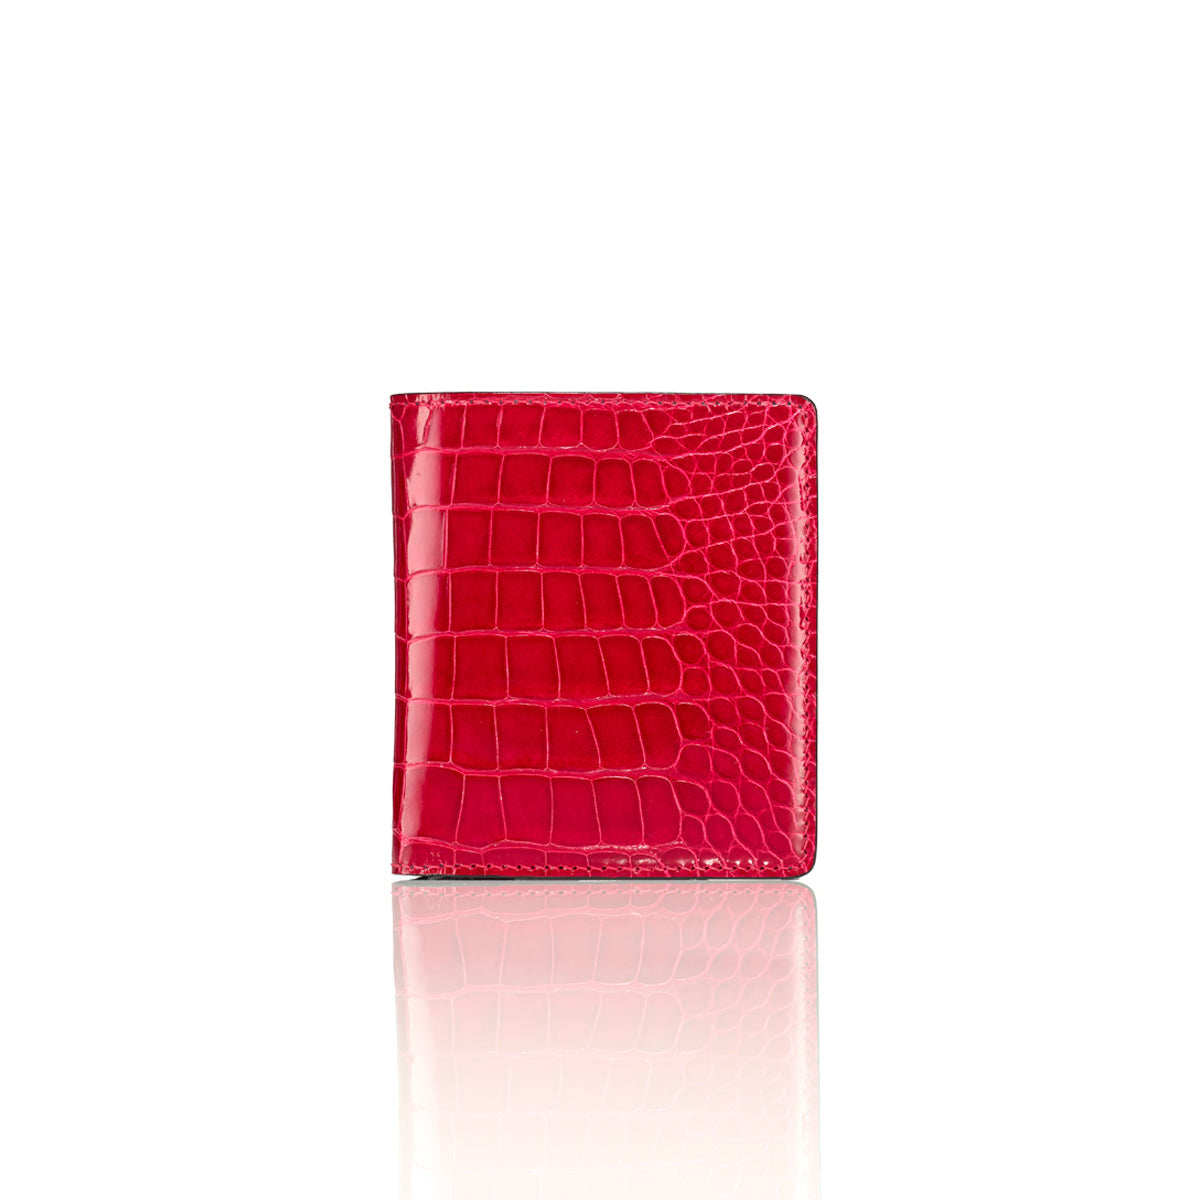 STALVEY Bi-Fold Wallet in Red Alligator